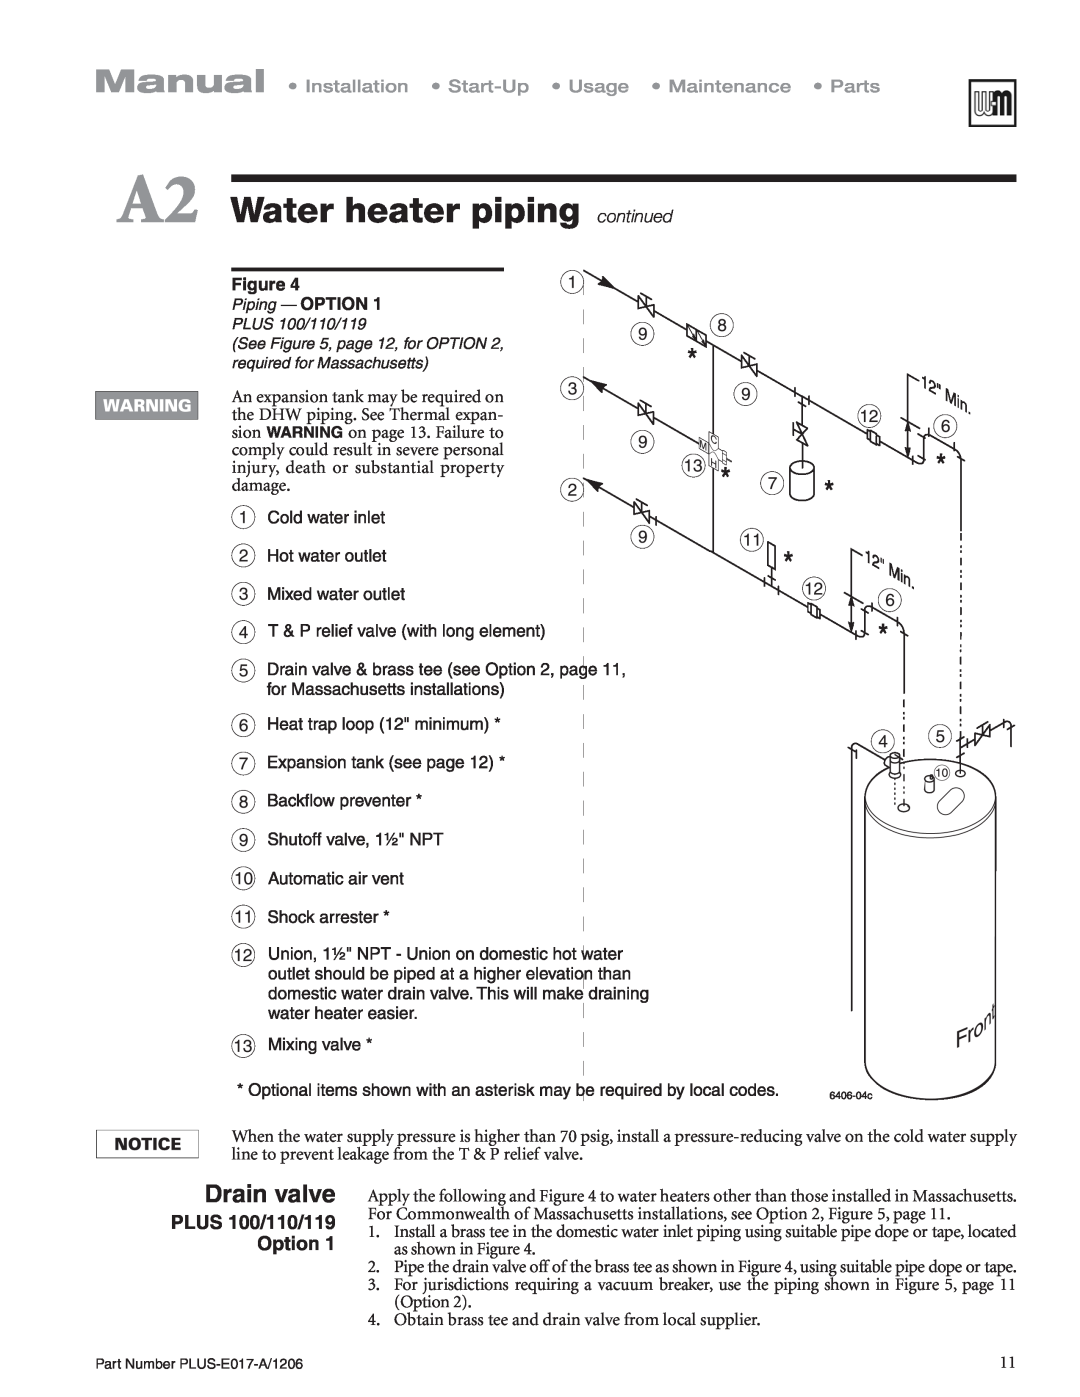 Weil-McLain PLUS-E017-A/1206 manual PLUS 100/110/119 Option, A2 Water heater pipingcontinued, Drain valve 